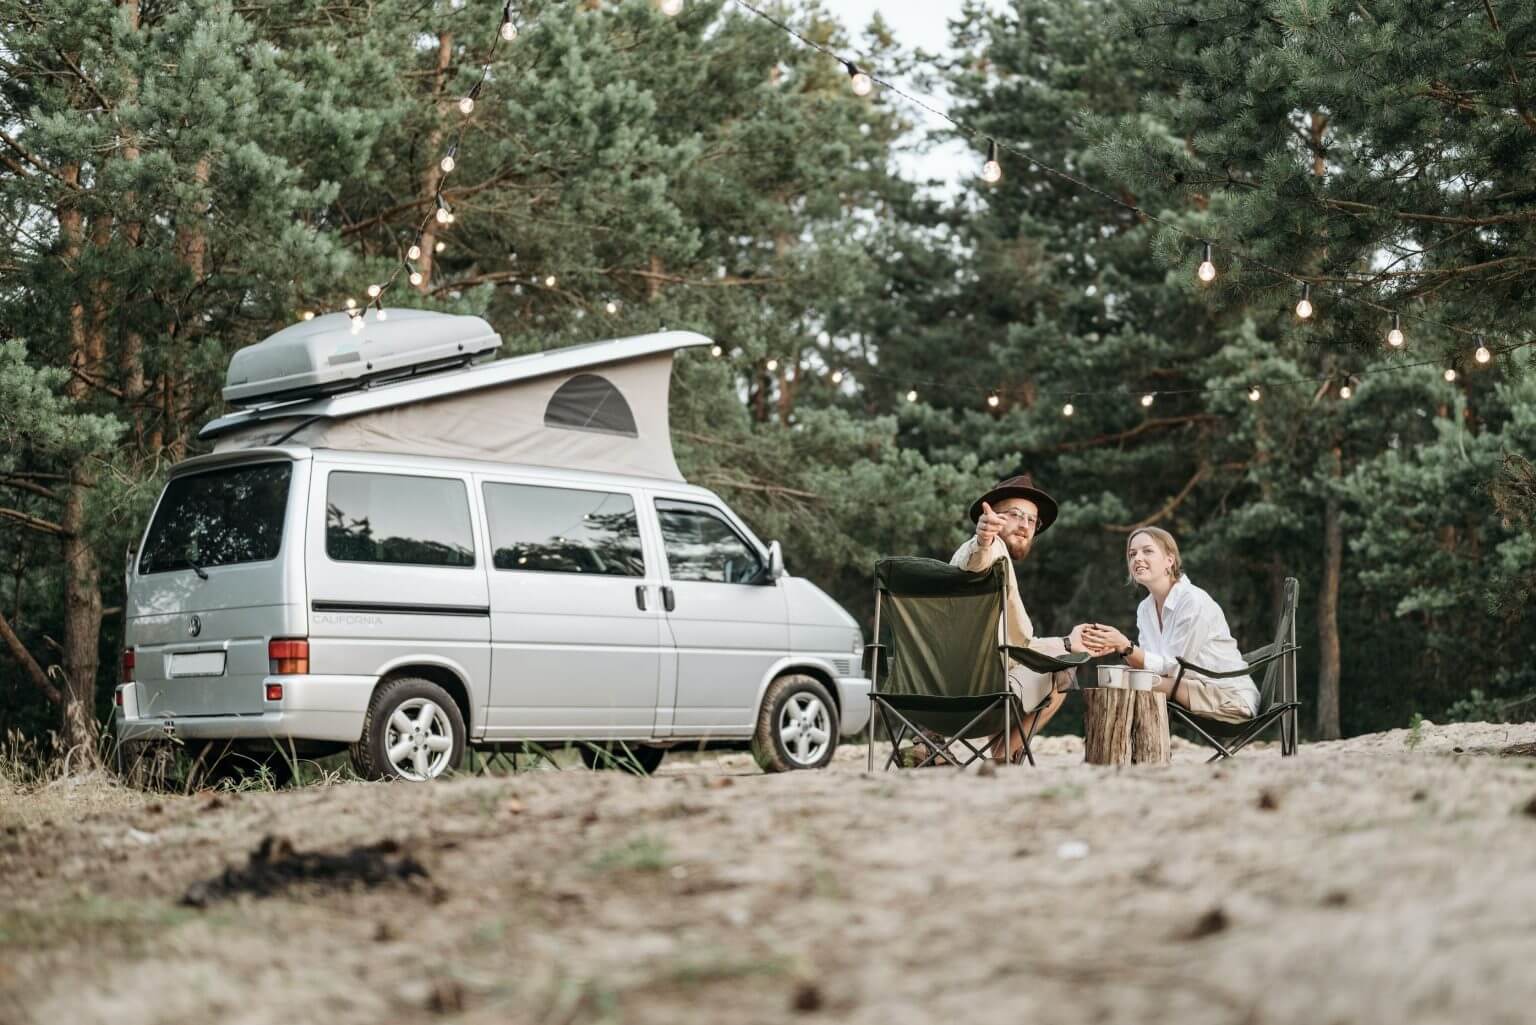 When we go camping. Гуччи кемпинг фотосессия.